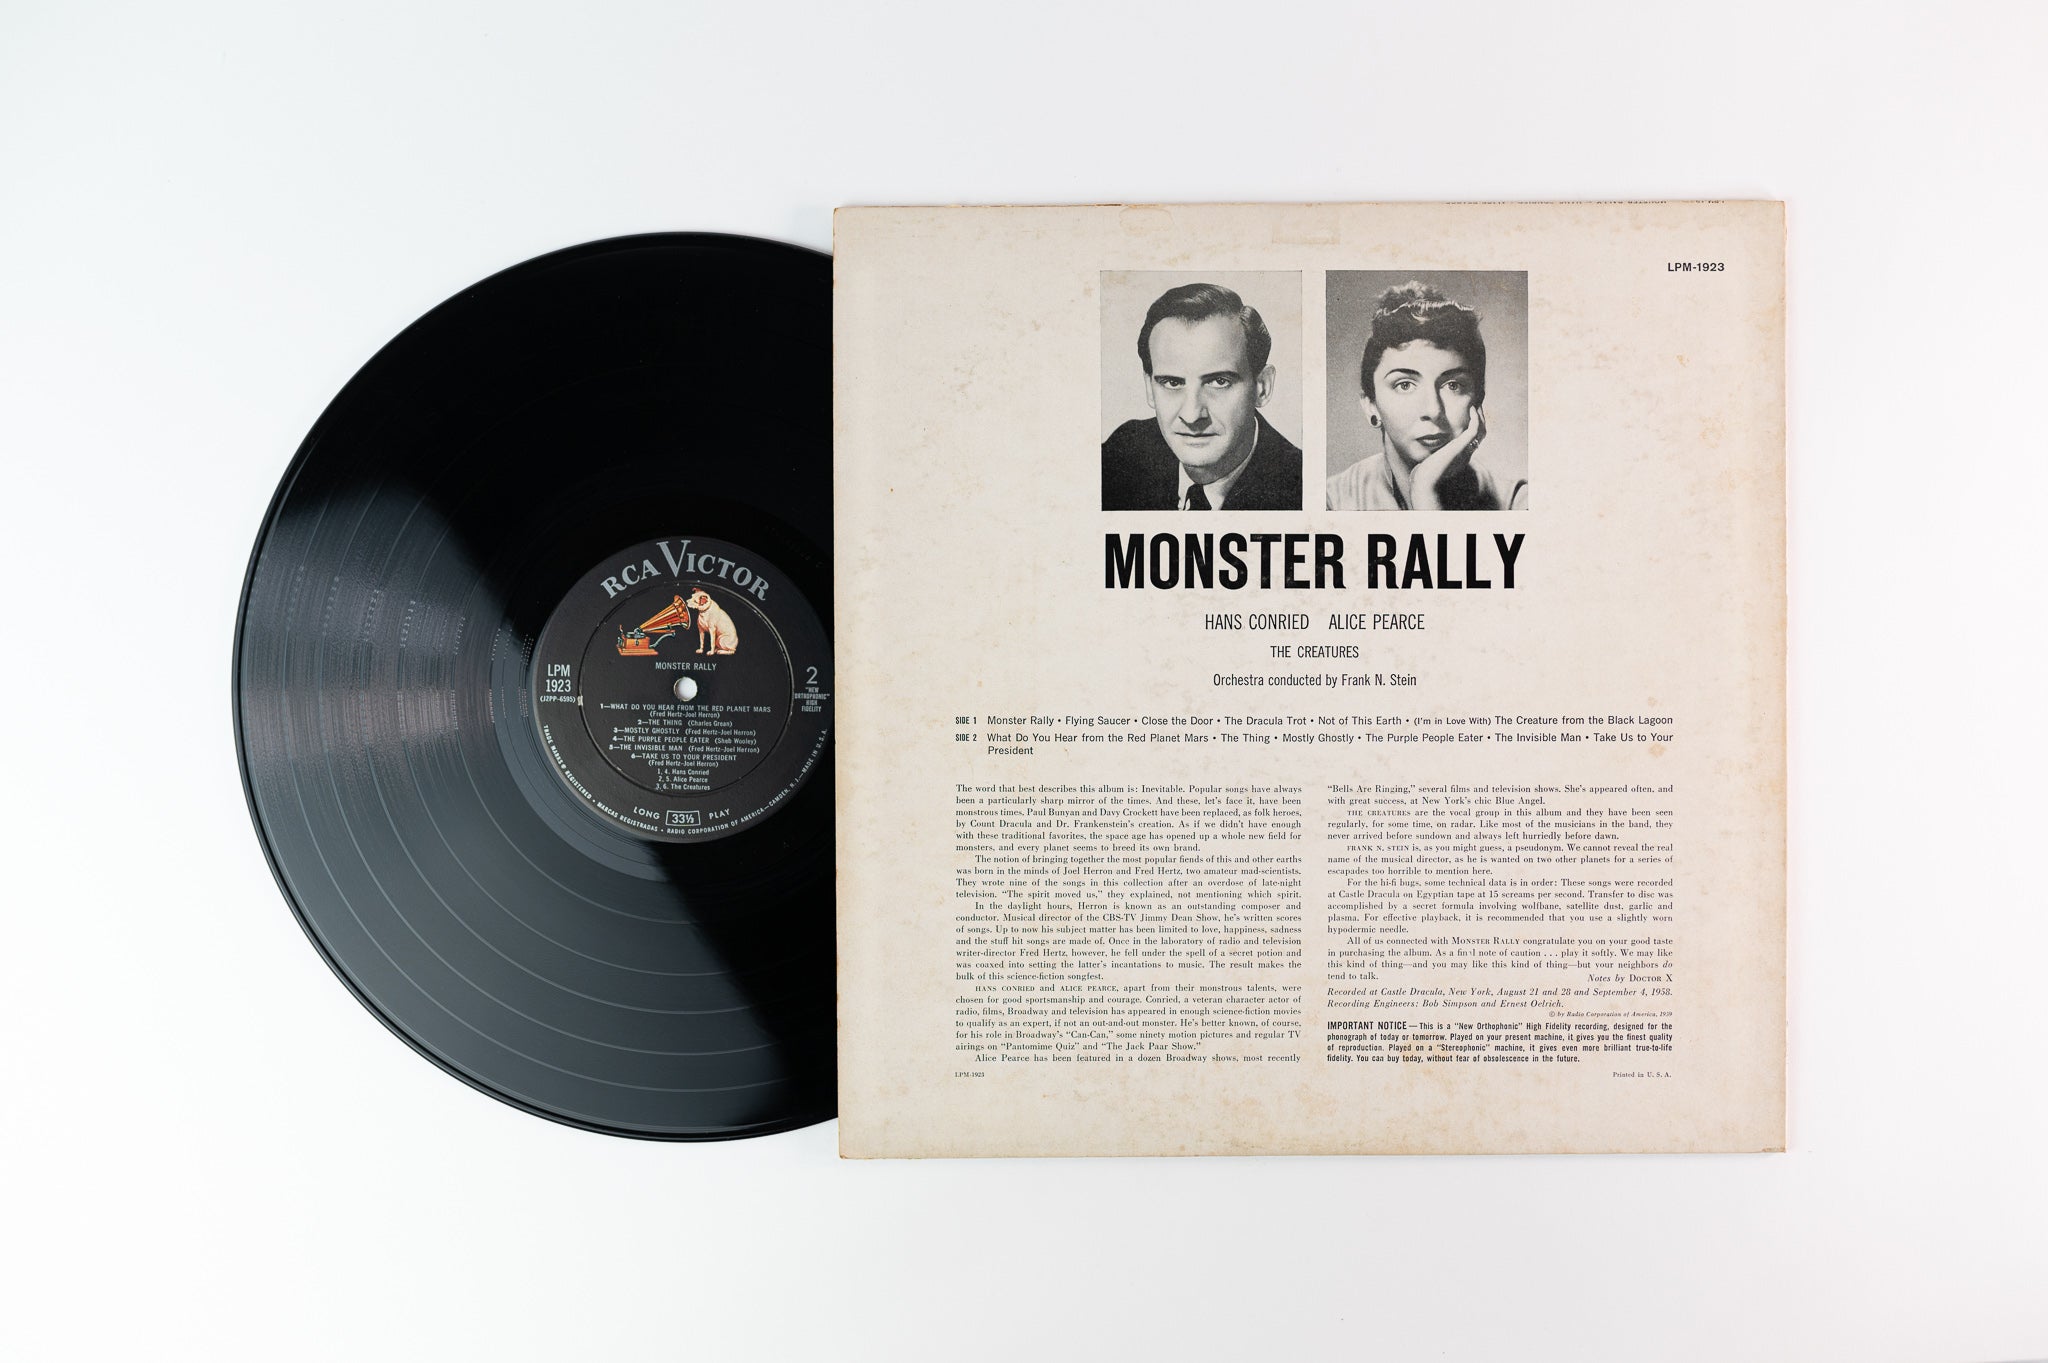 Hans Conried - Monster Rally on RCA Victor - Mono